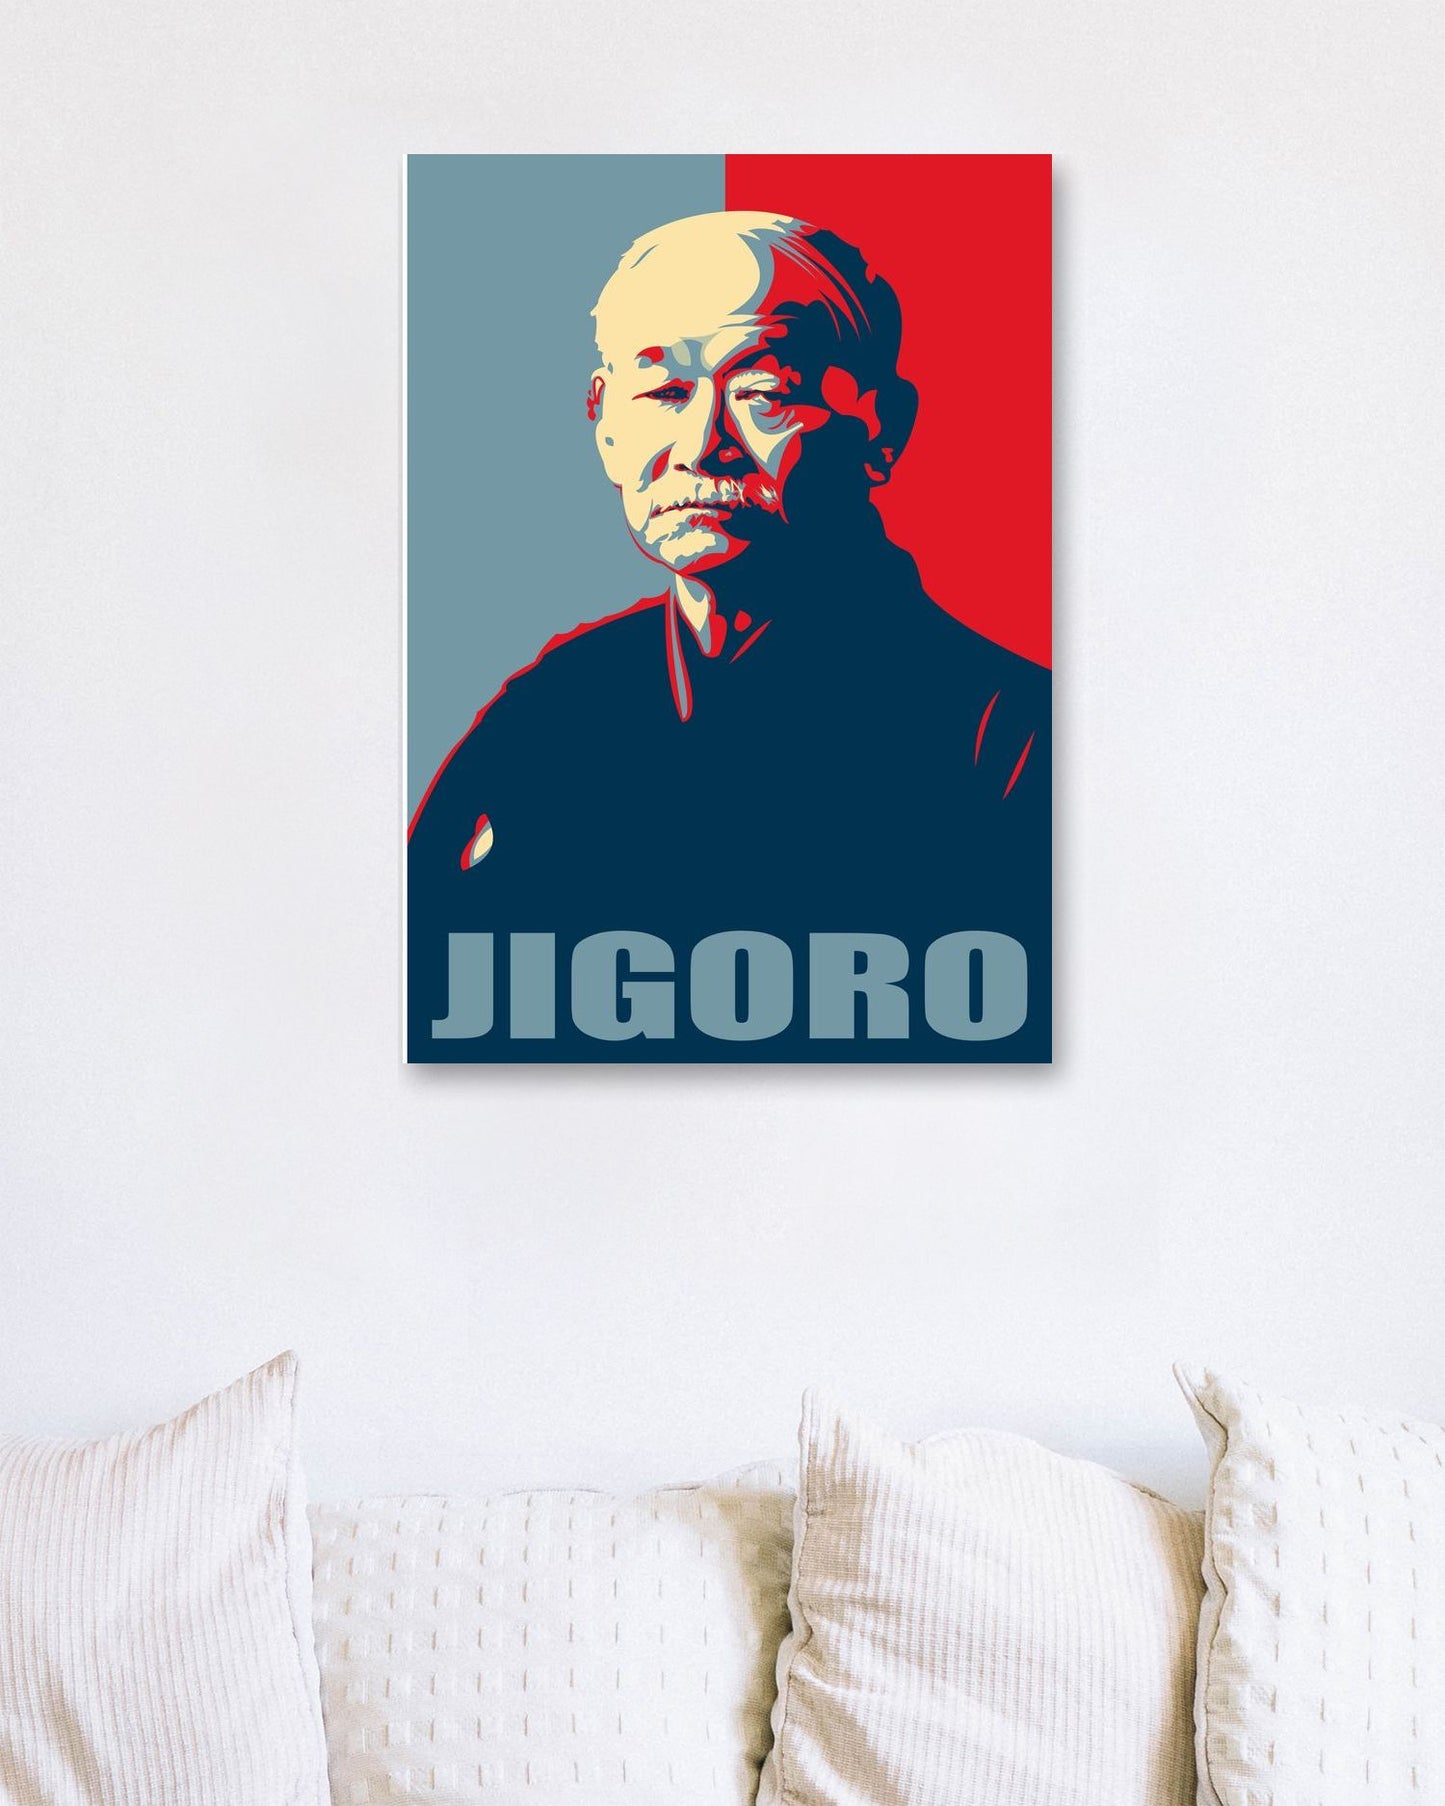 jigoro kano - @fillart